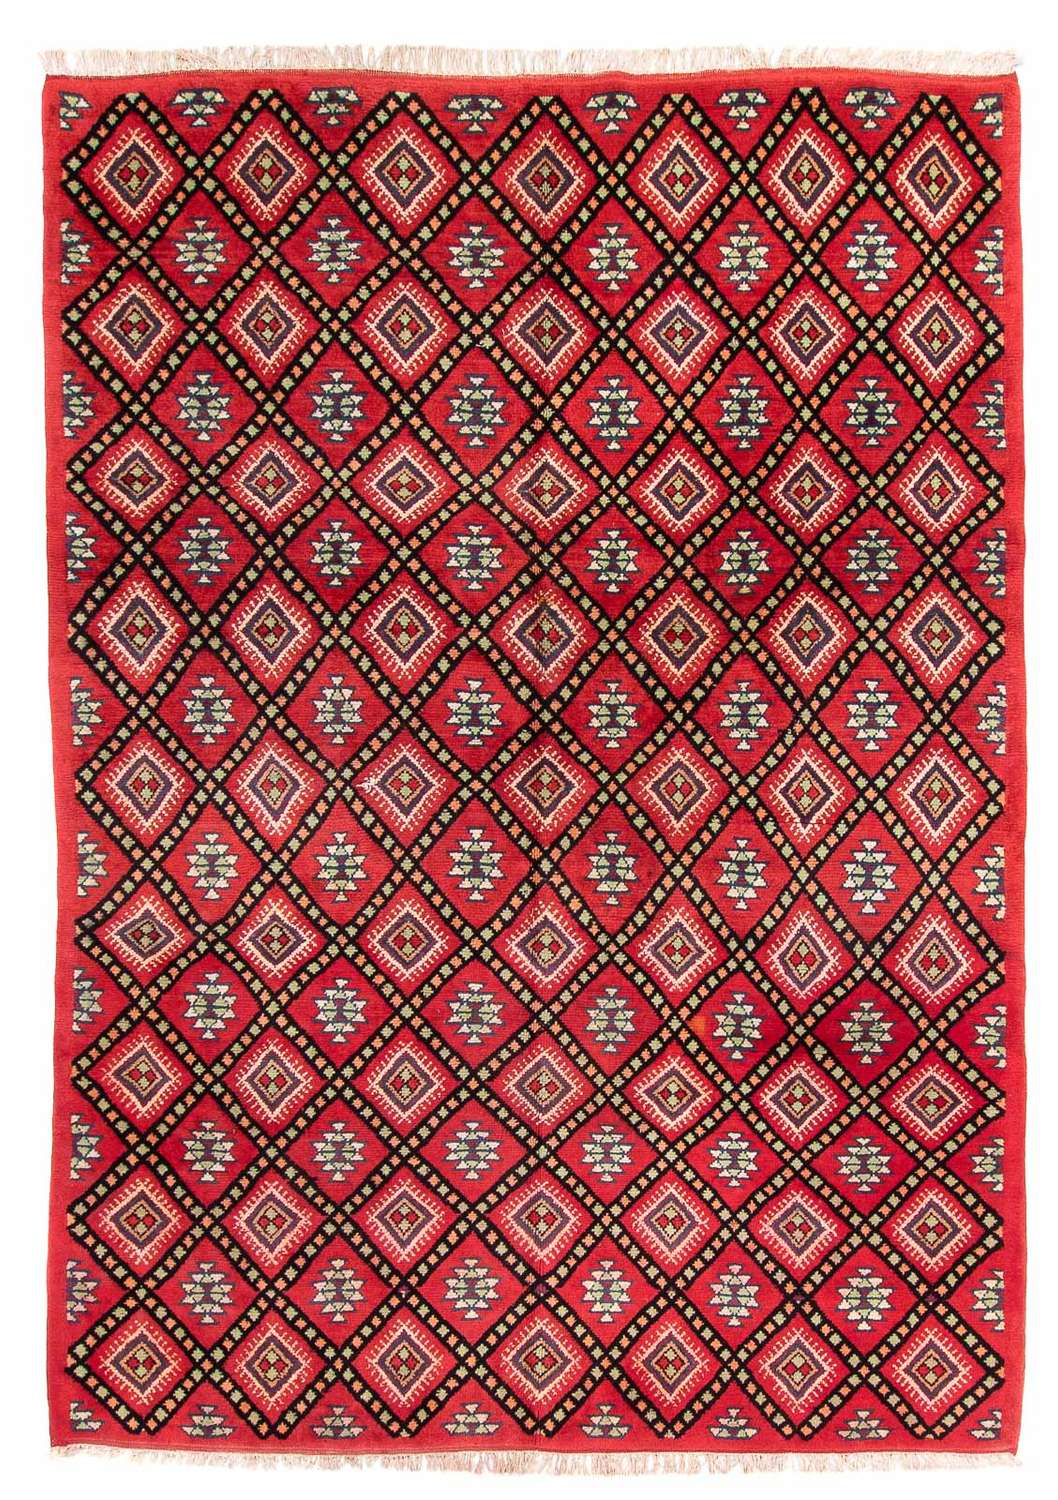 Berber Rug - 281 x 198 cm - red